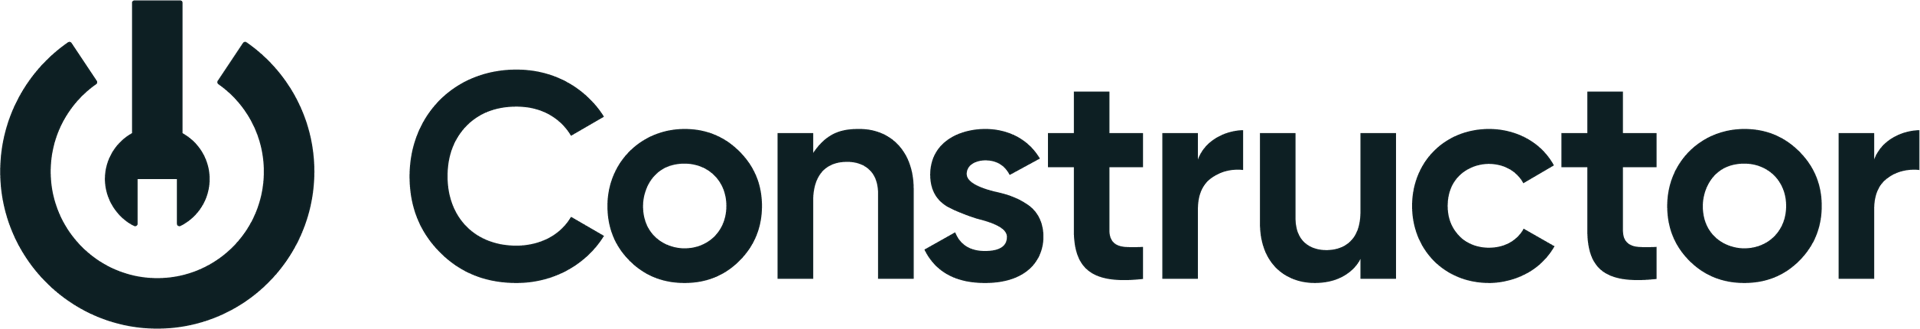 constructor logo